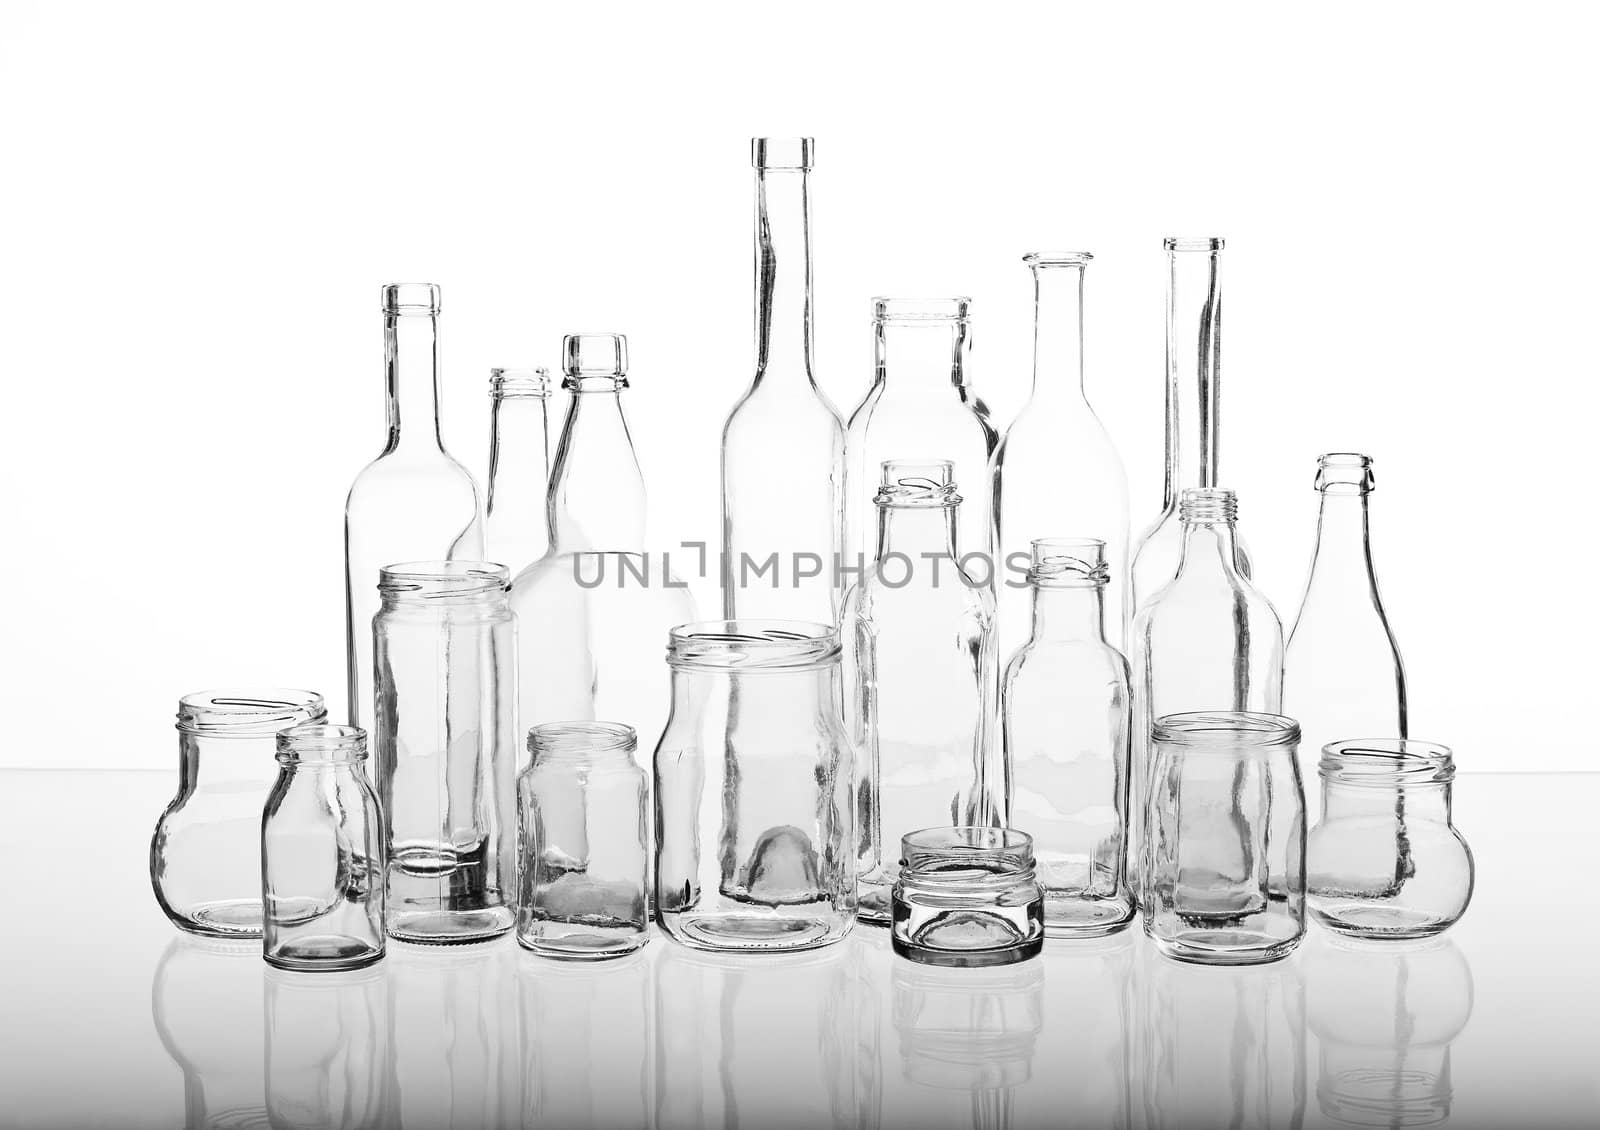 glass bottles by gemenacom